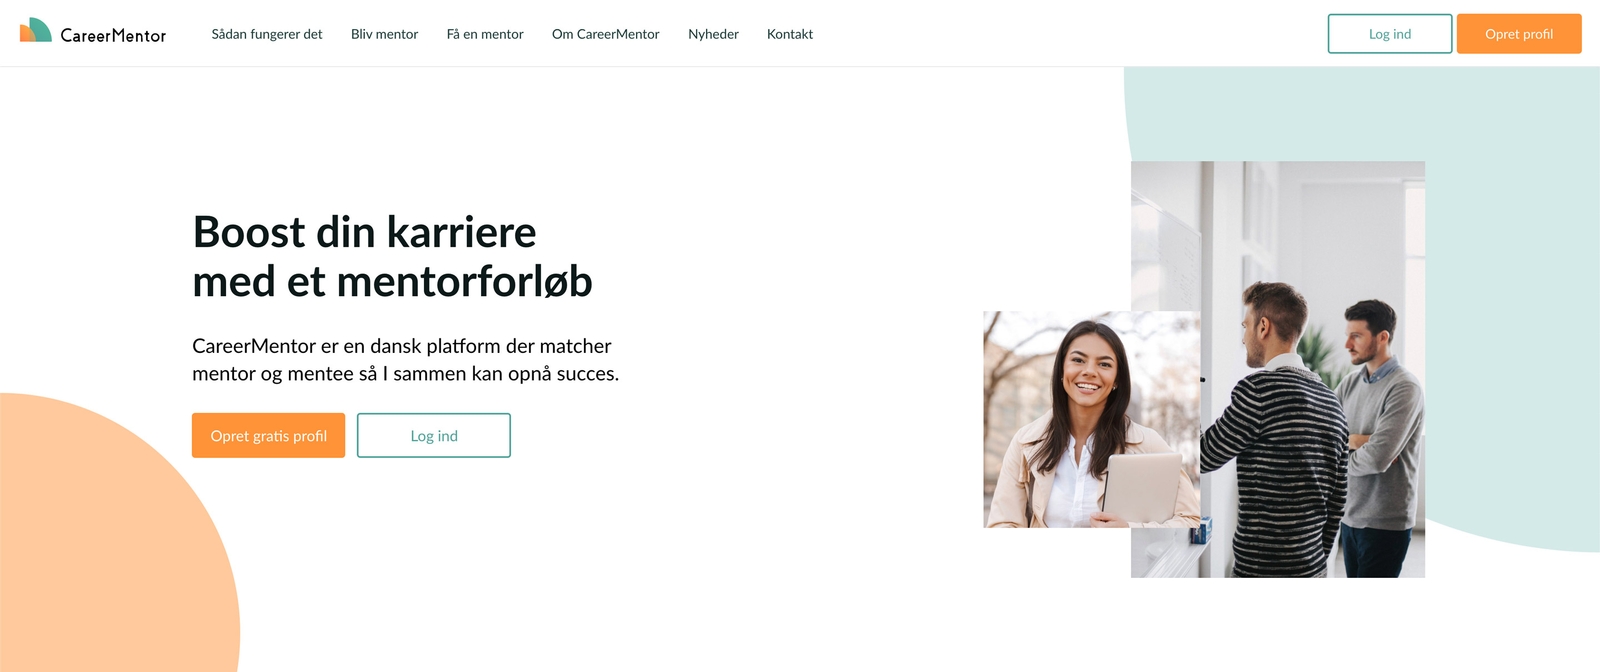 CareerMentor project | Henrik H. Boelsmand | Freelance Developer